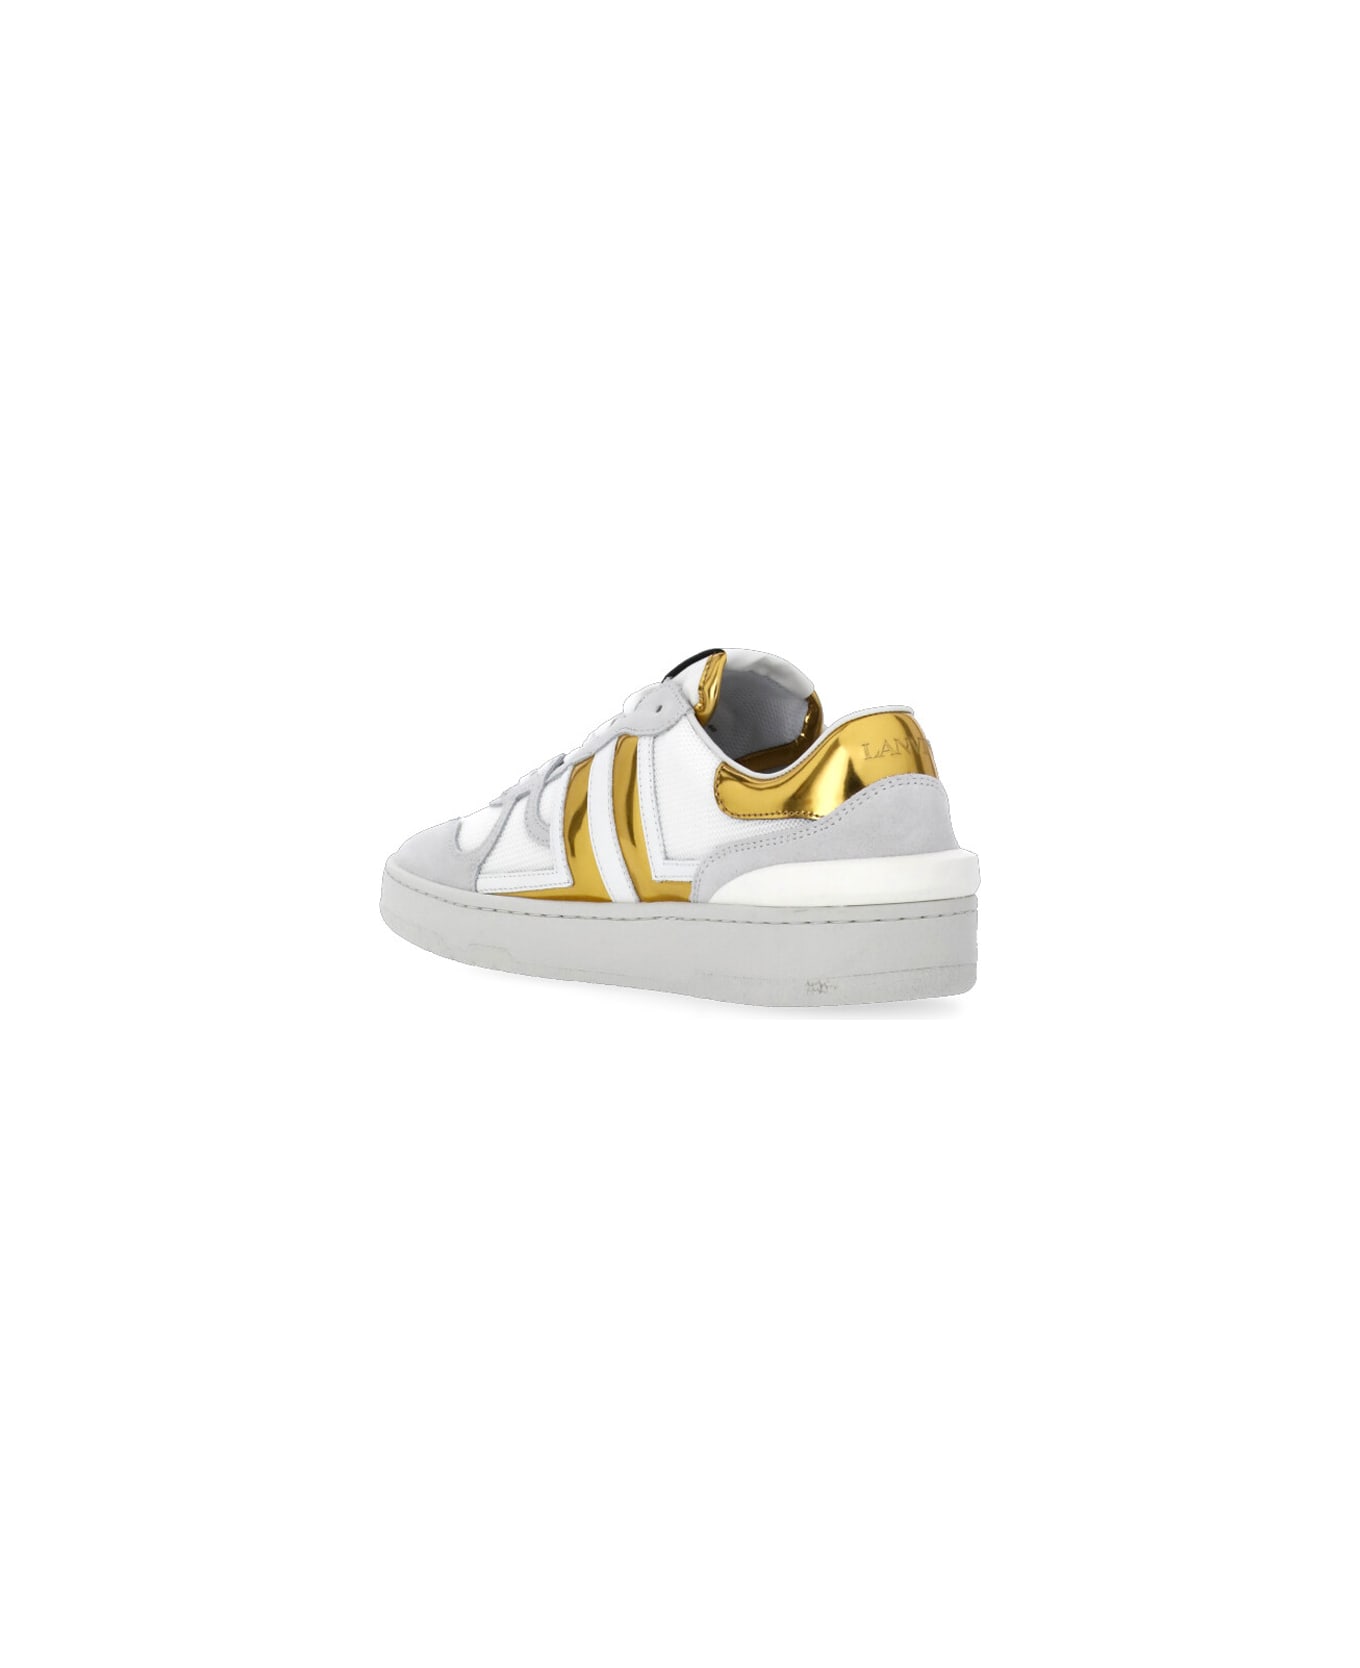 Lanvin Top Sneakers - White